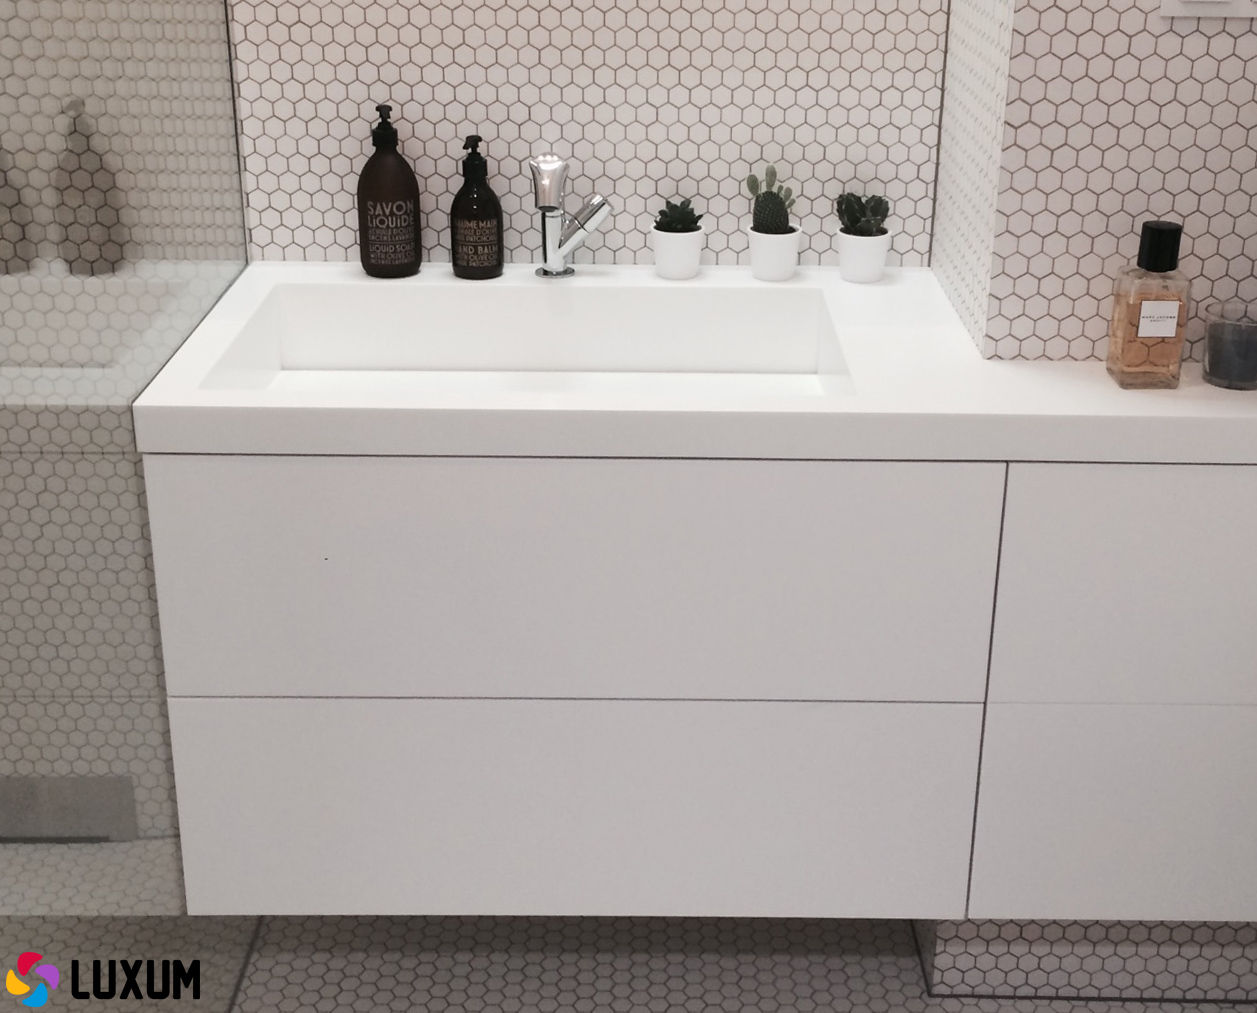 Minimalistyczna umywalka od Luxum, Luxum Luxum Minimalist style bathroom